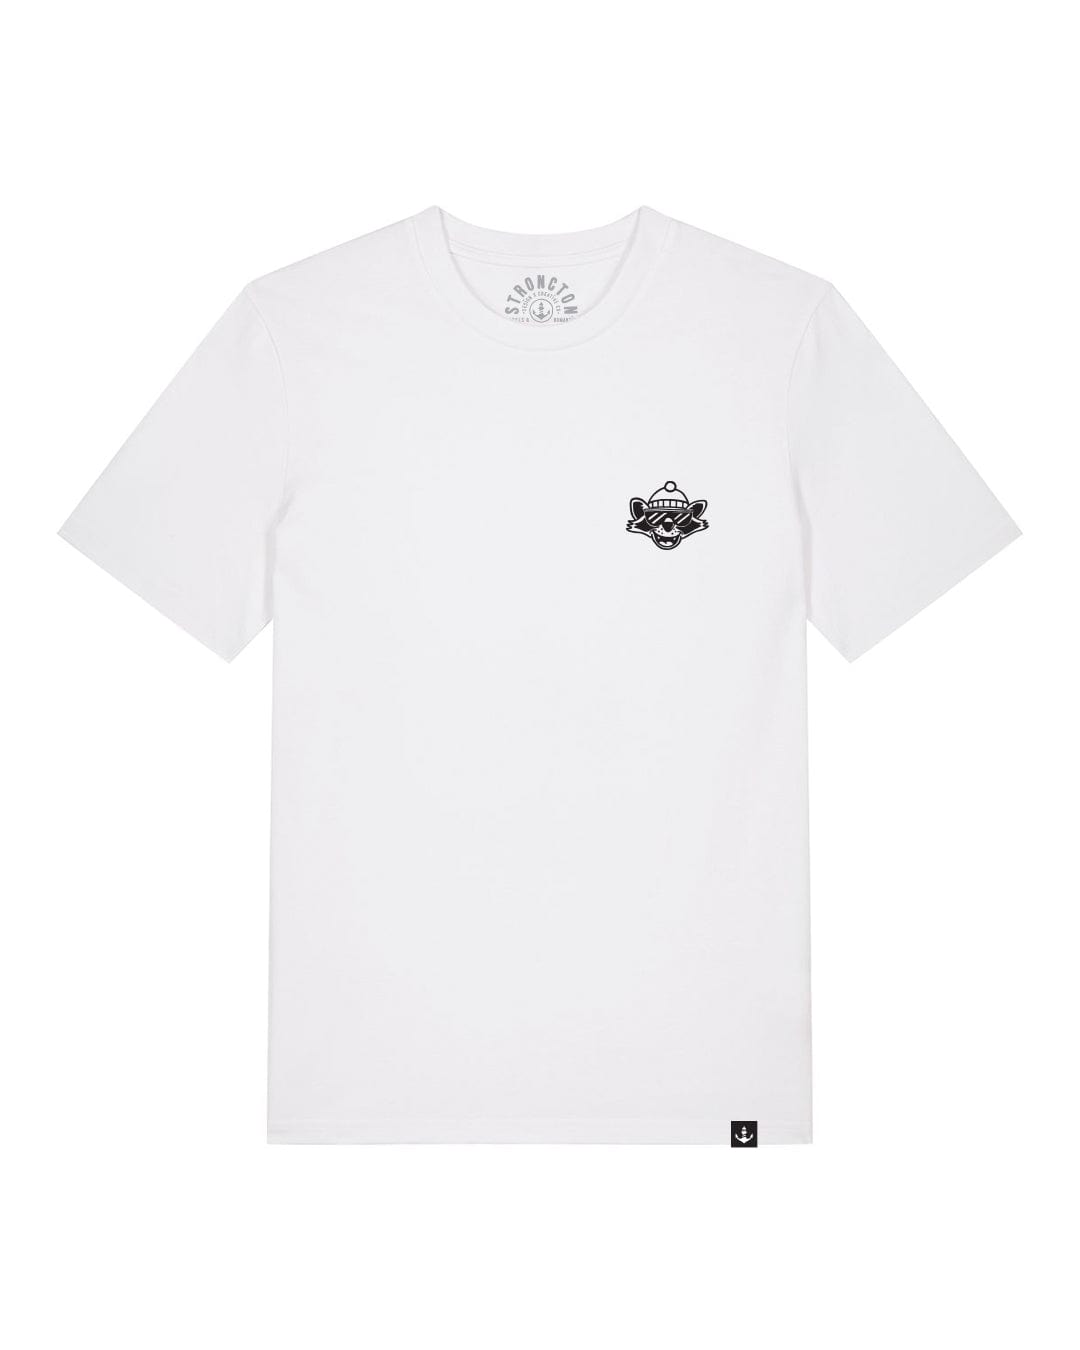 Stoked Fred Organic T-Shirt - White